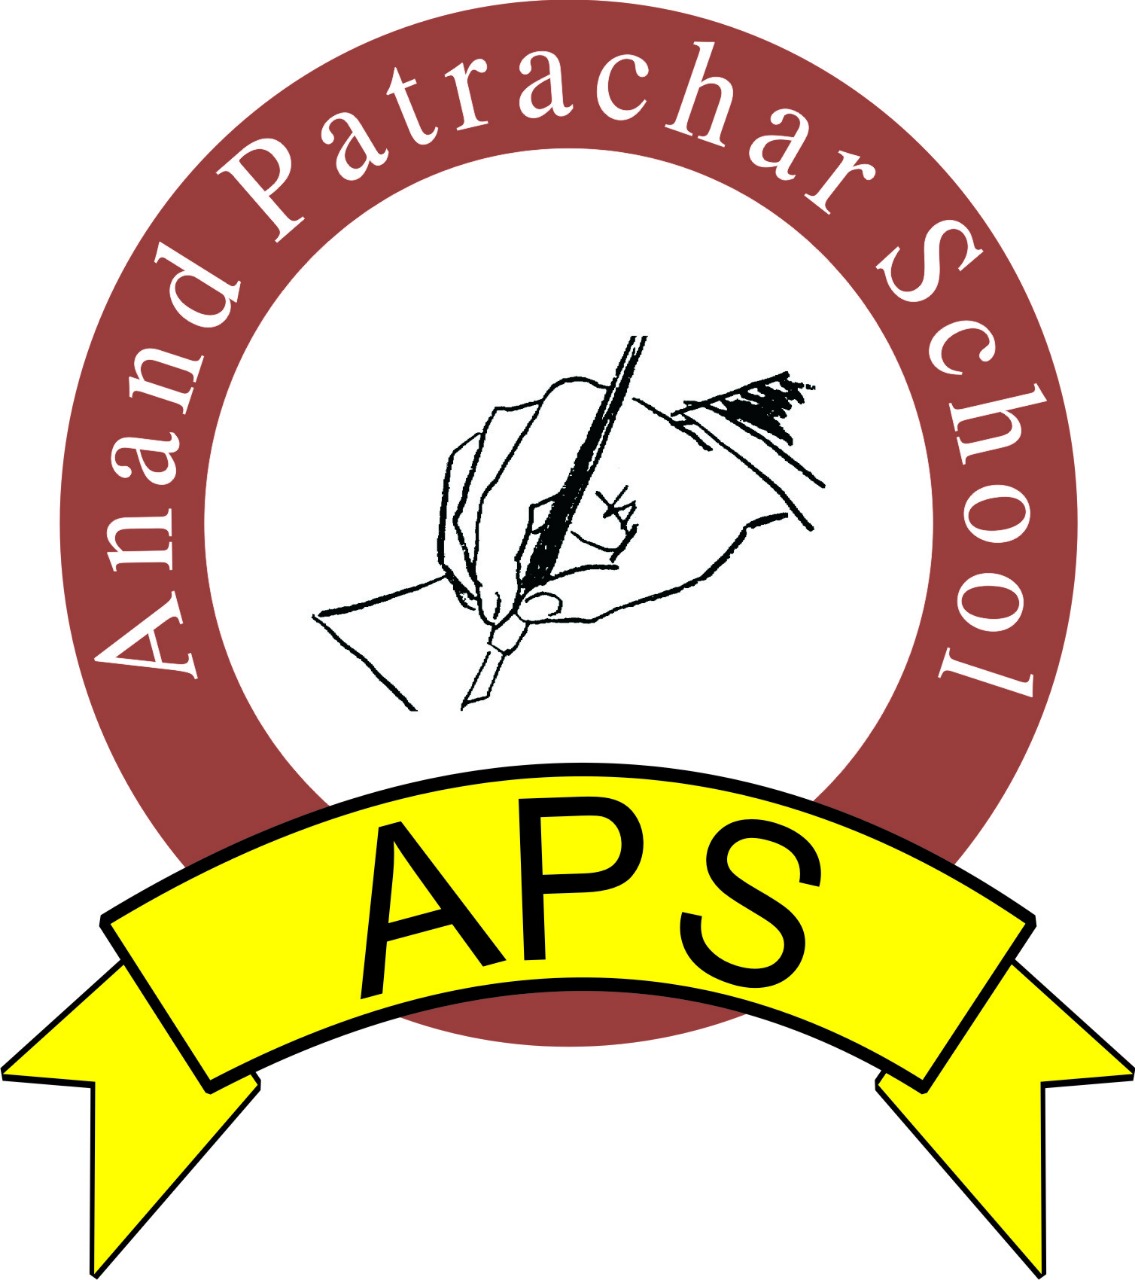 Anand Patrachar School (APS)